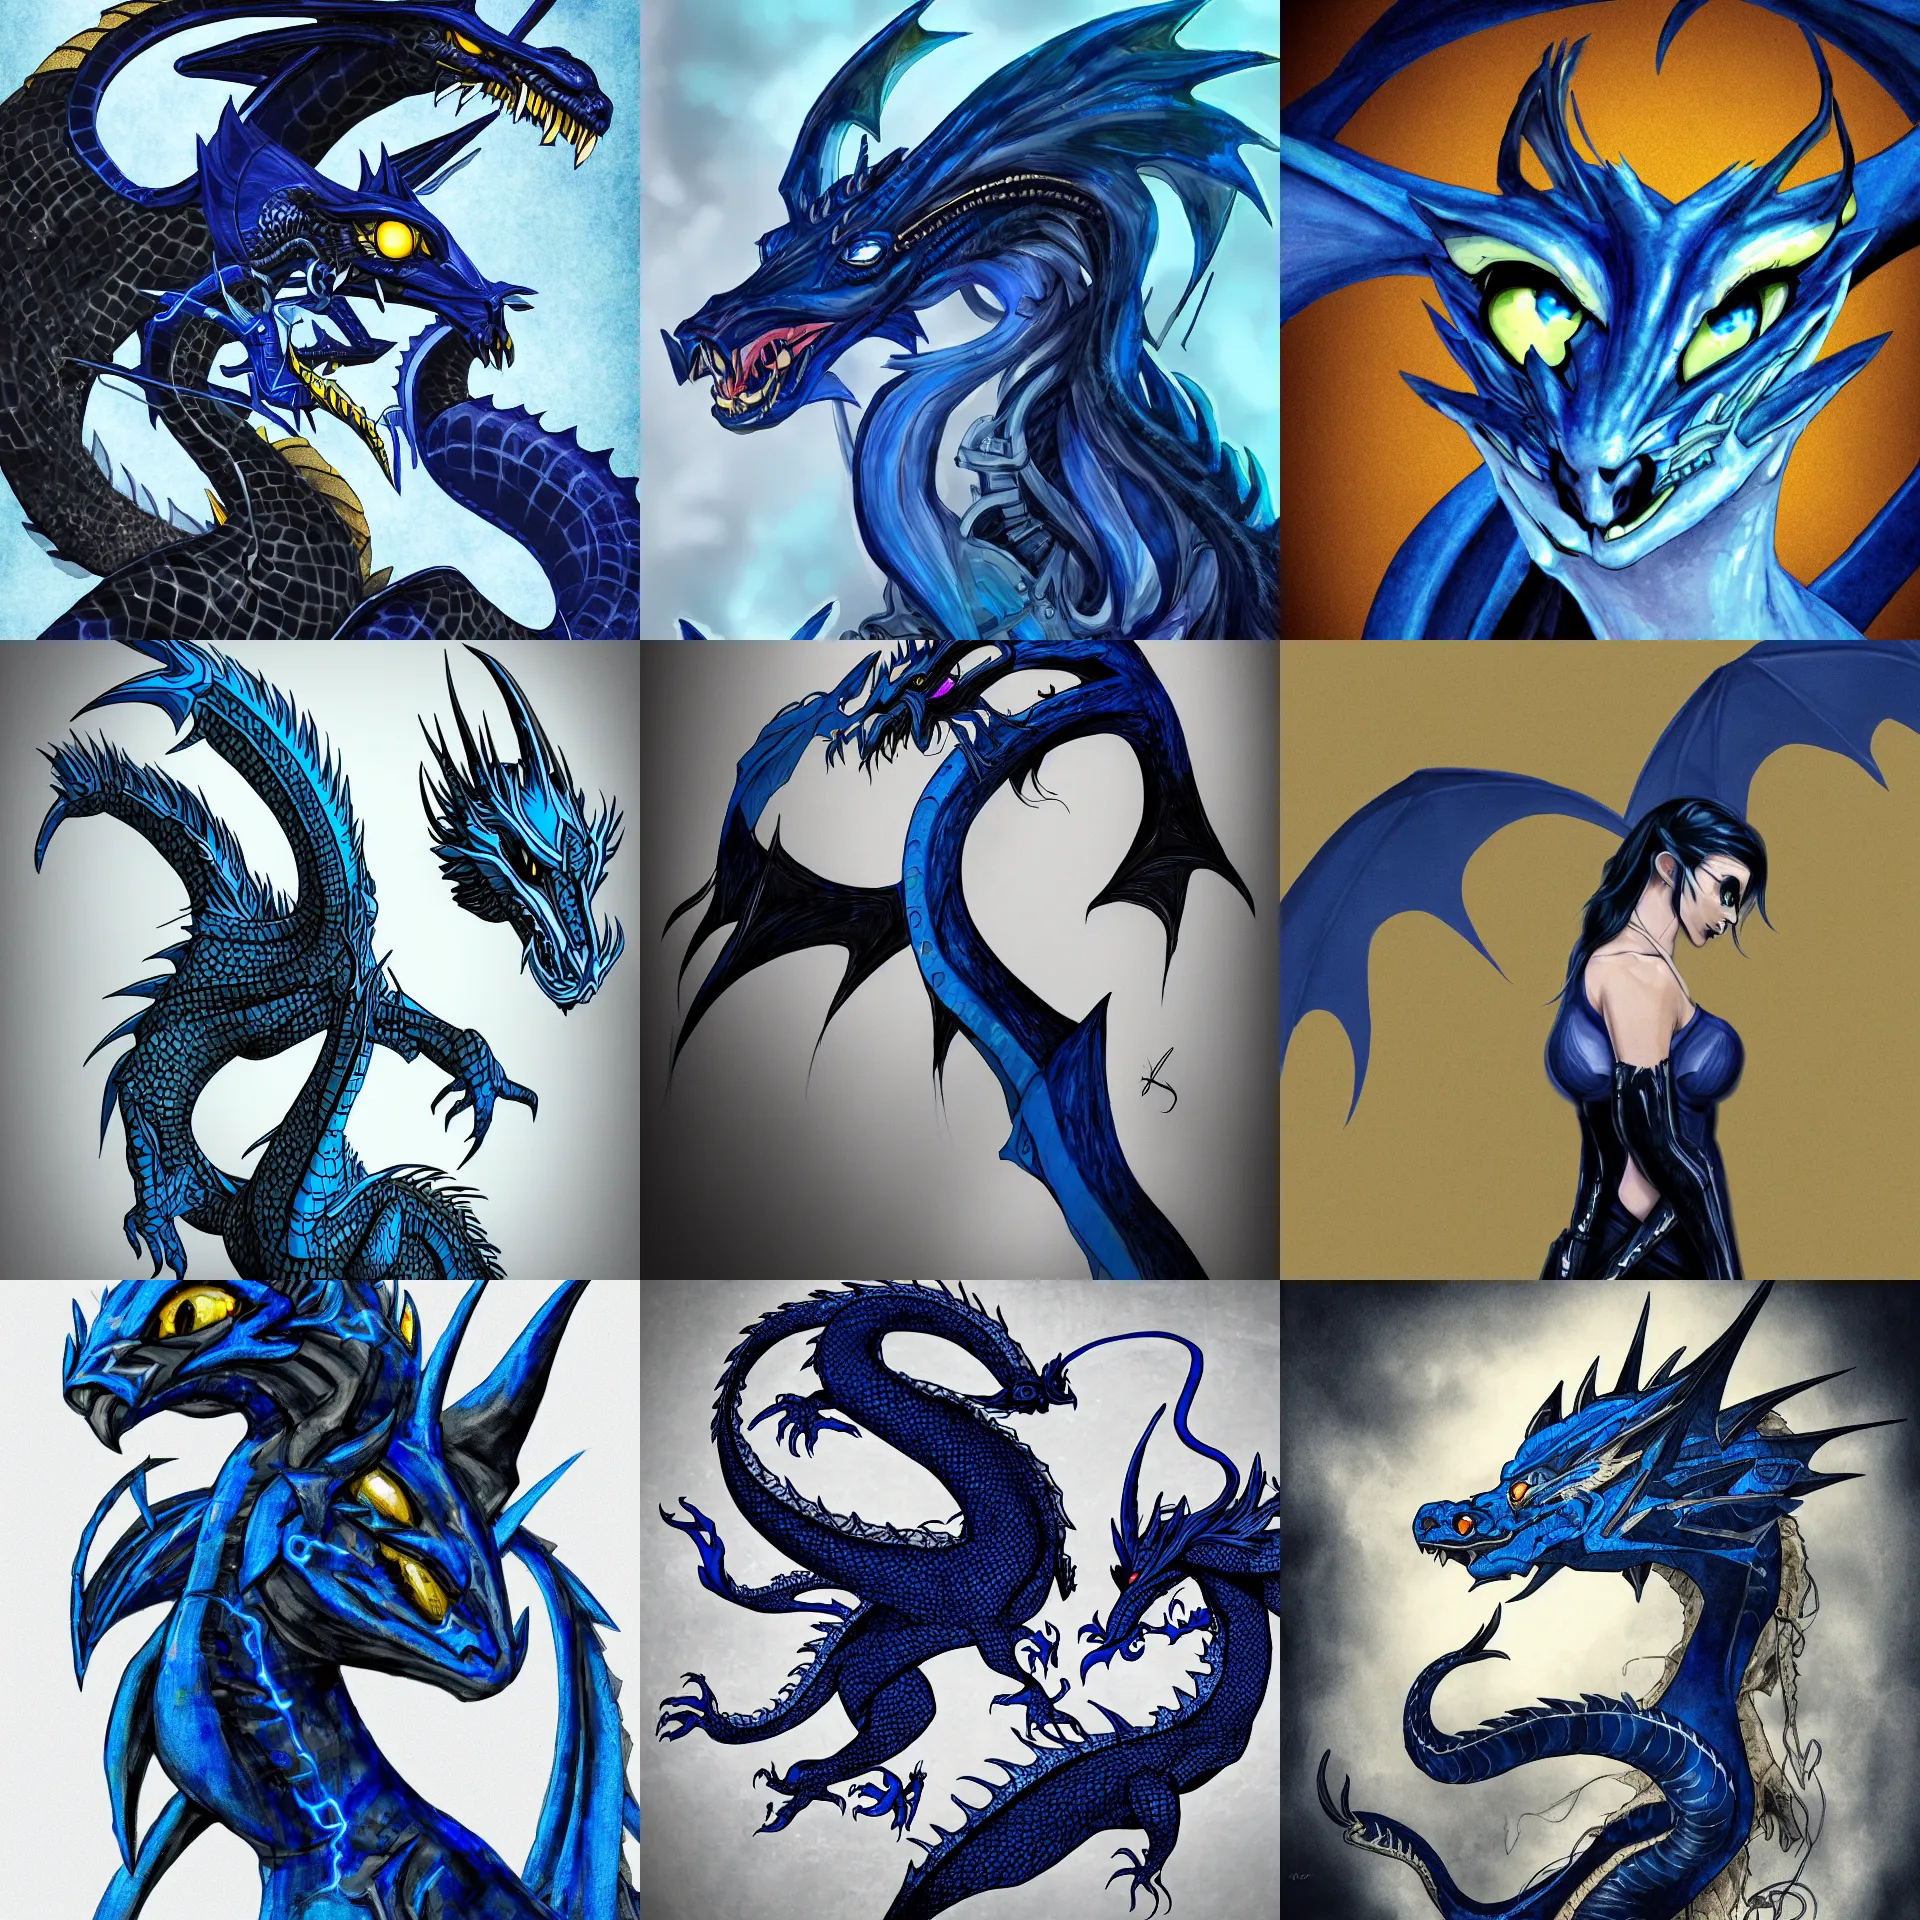 Prompt: cyber noir portrait of a blue and black female dragon